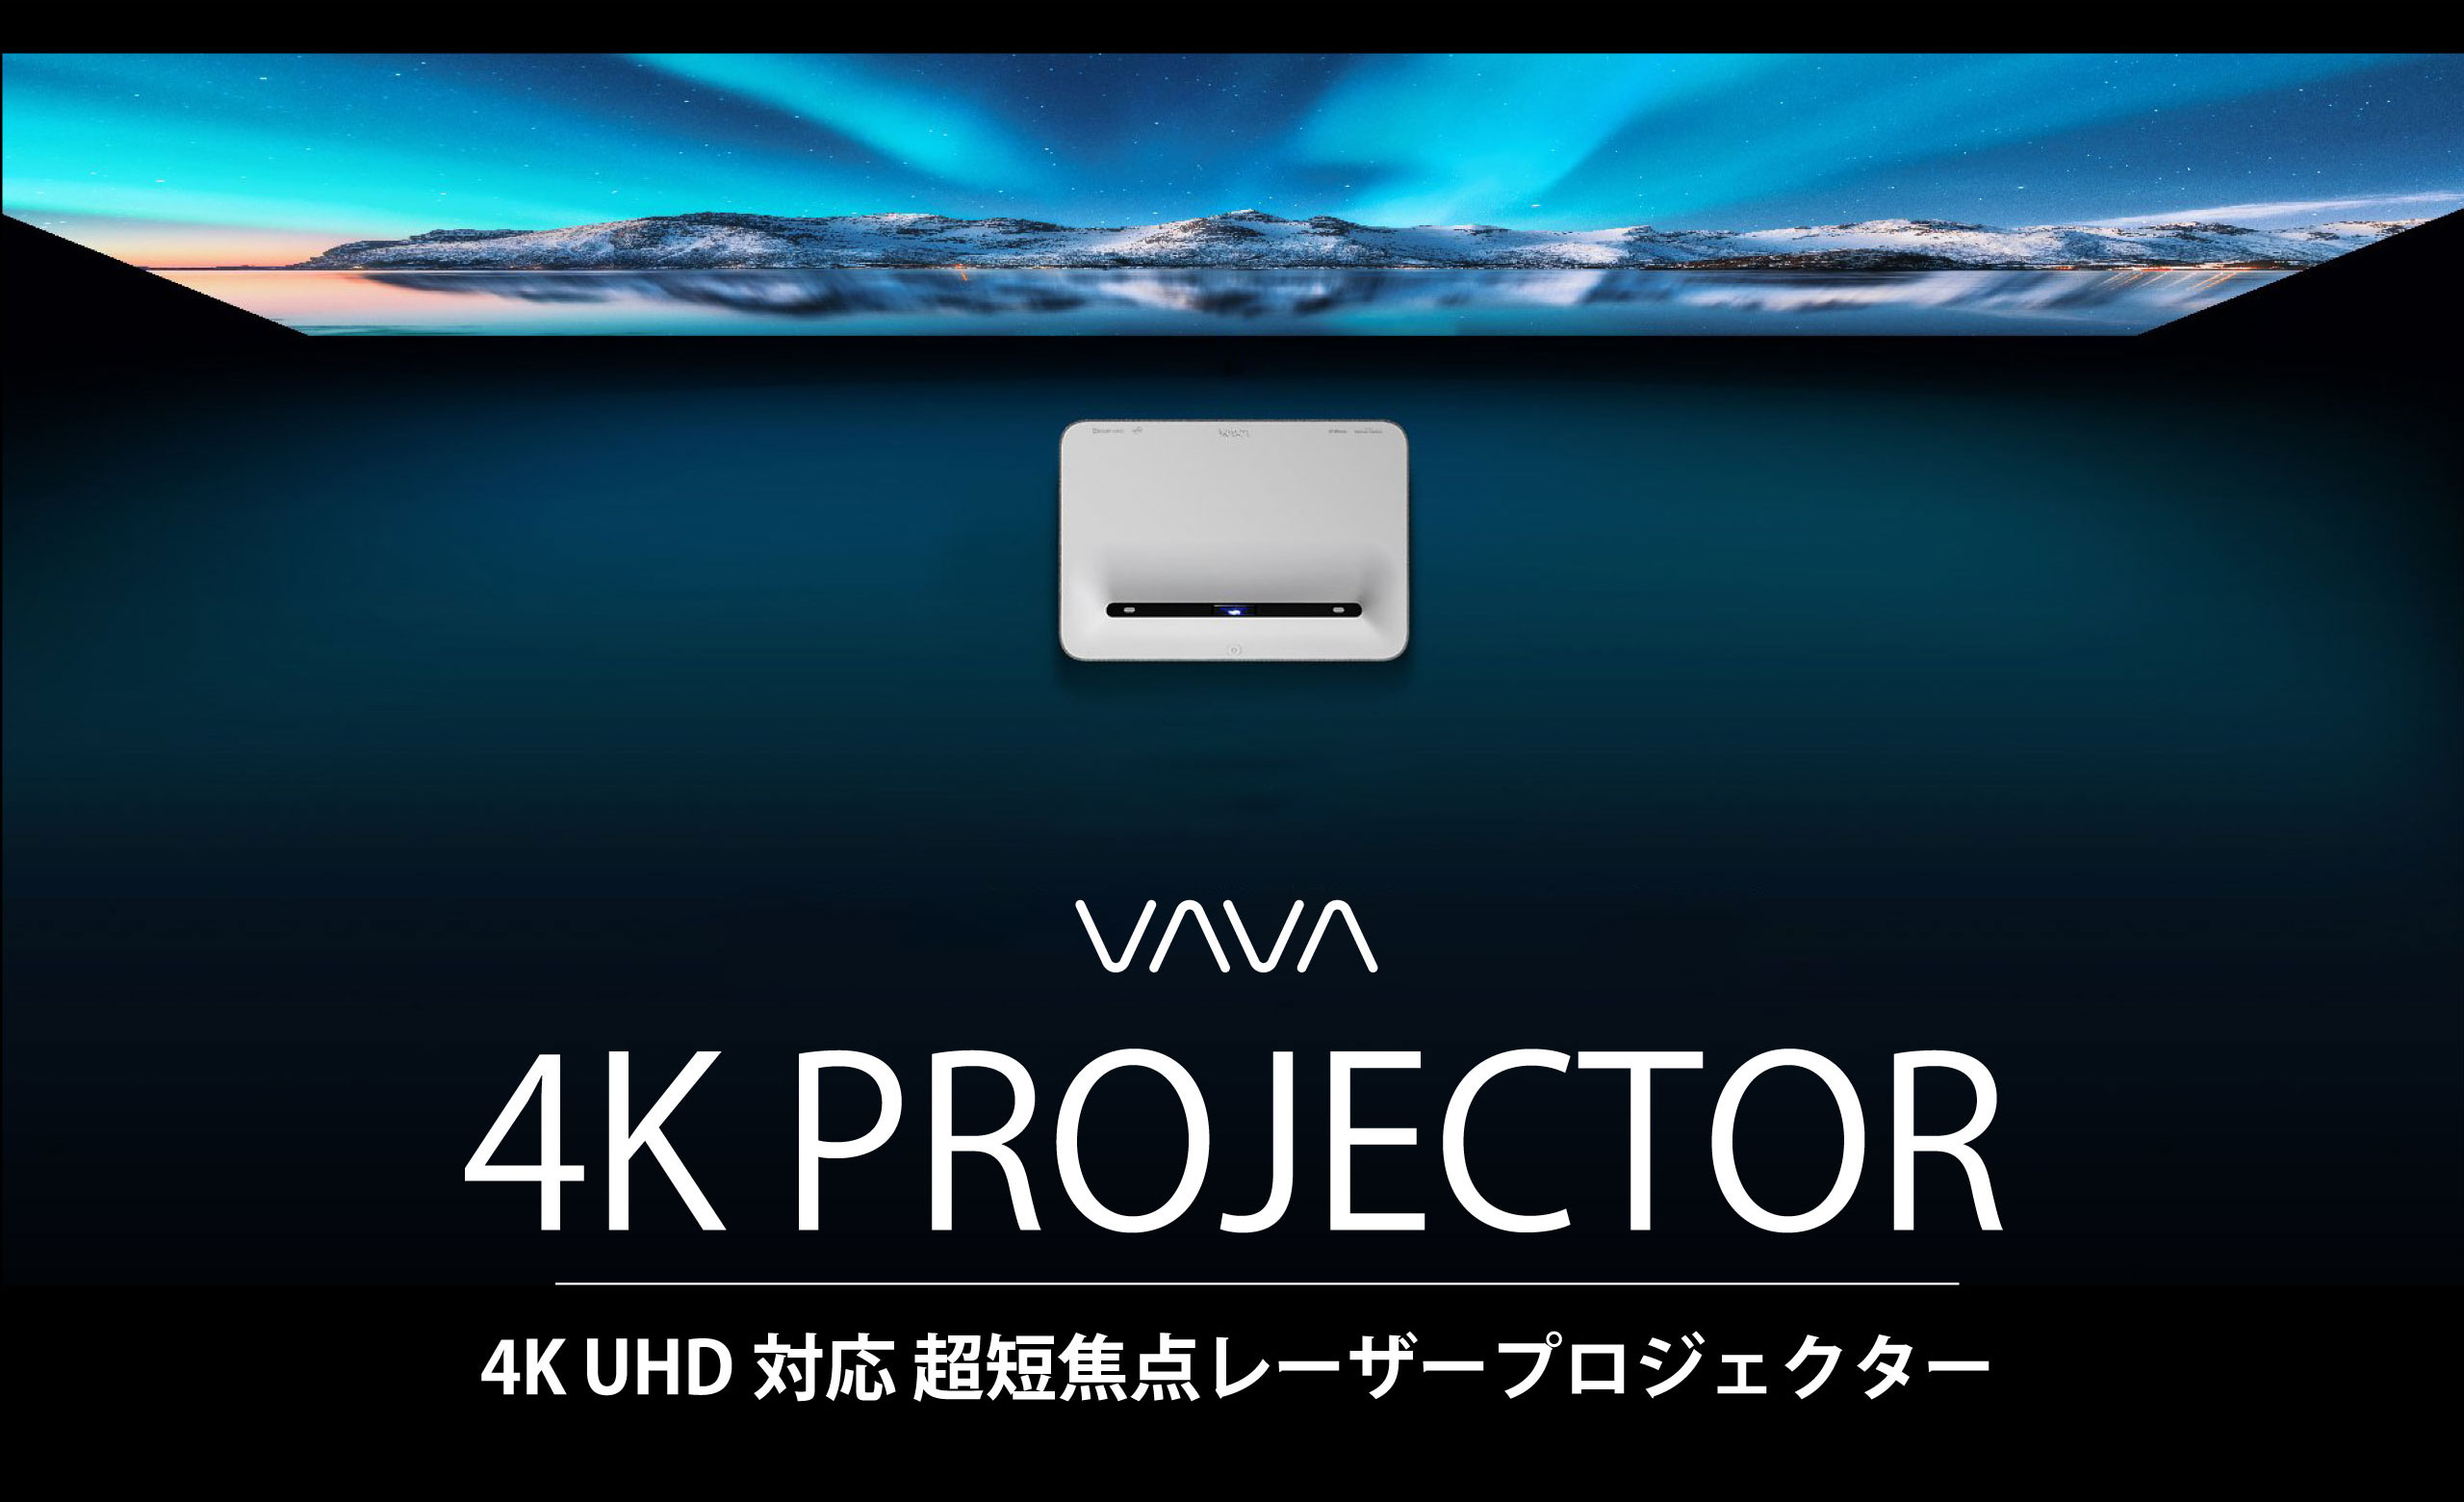 VA-LT002 Black 超短焦点4Kプロジェクター